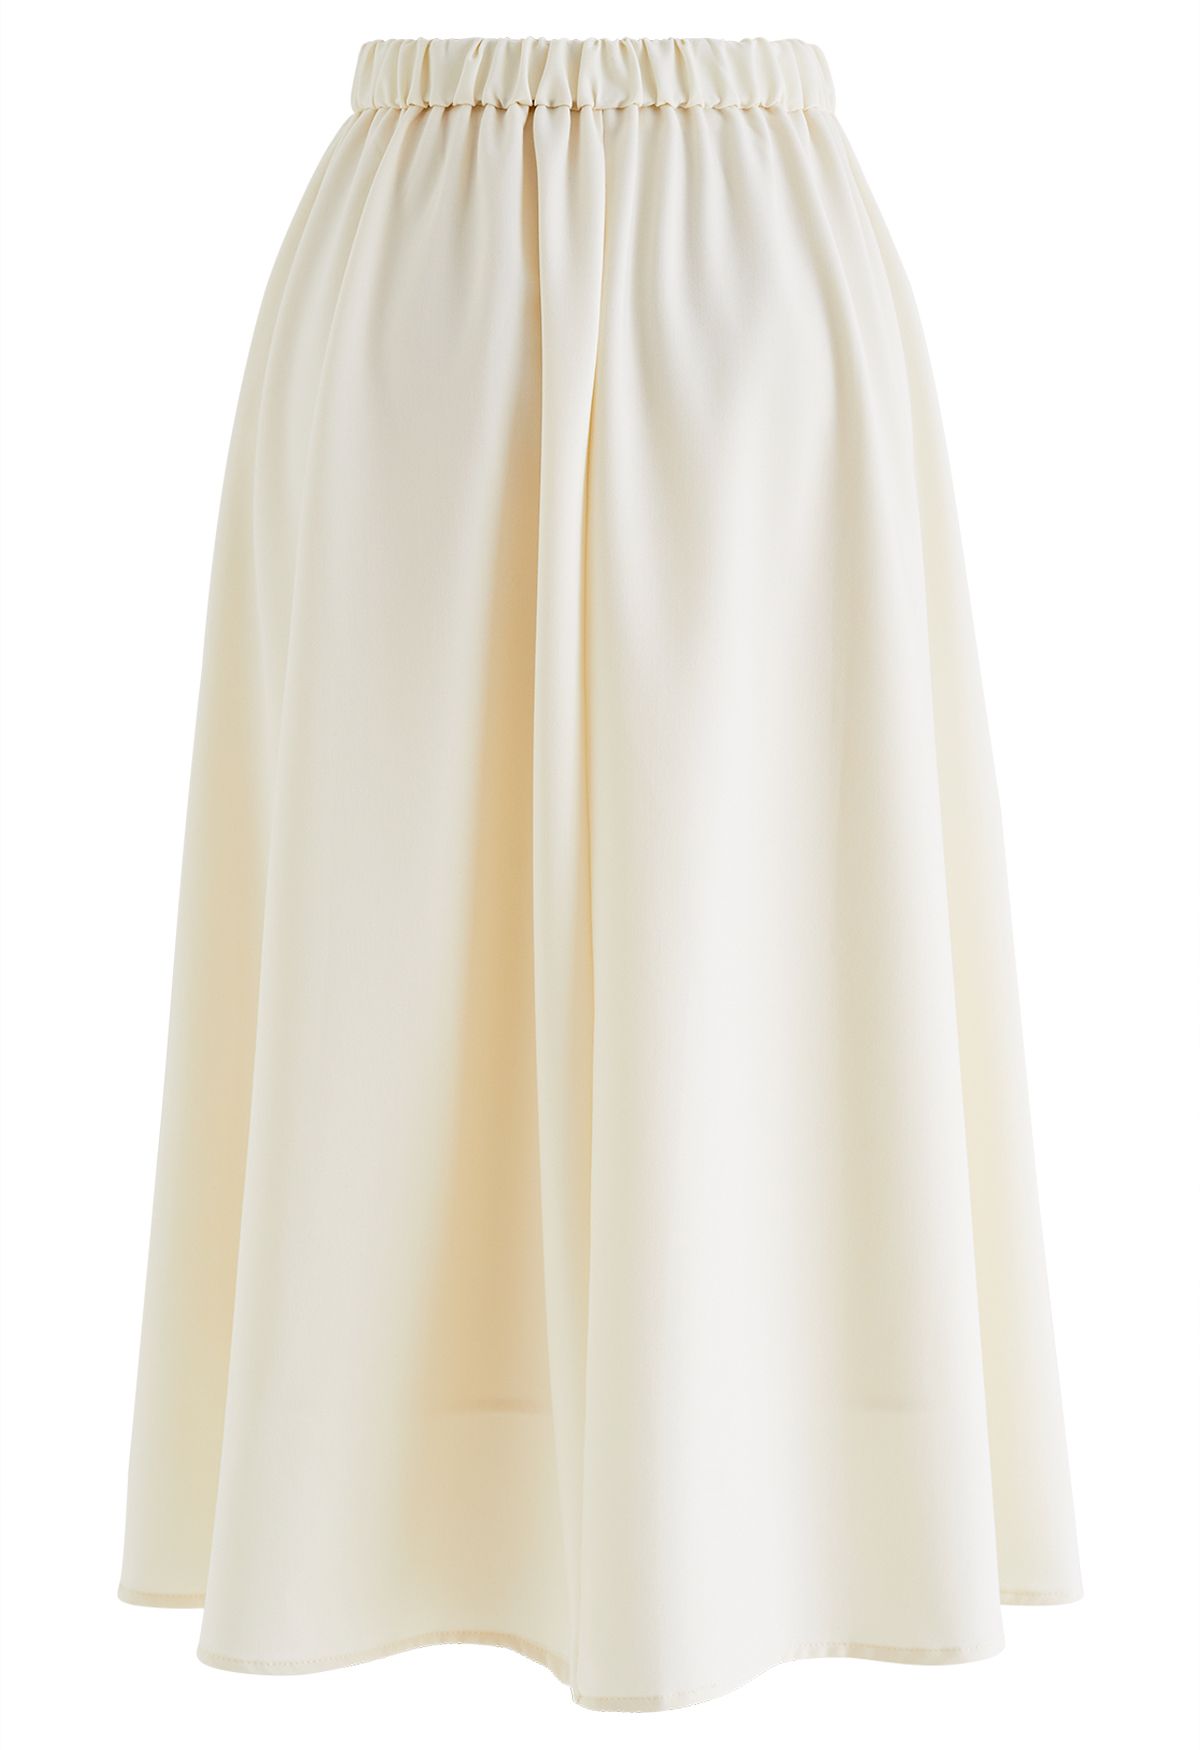 Double Pleated Midi Skirt in Cream